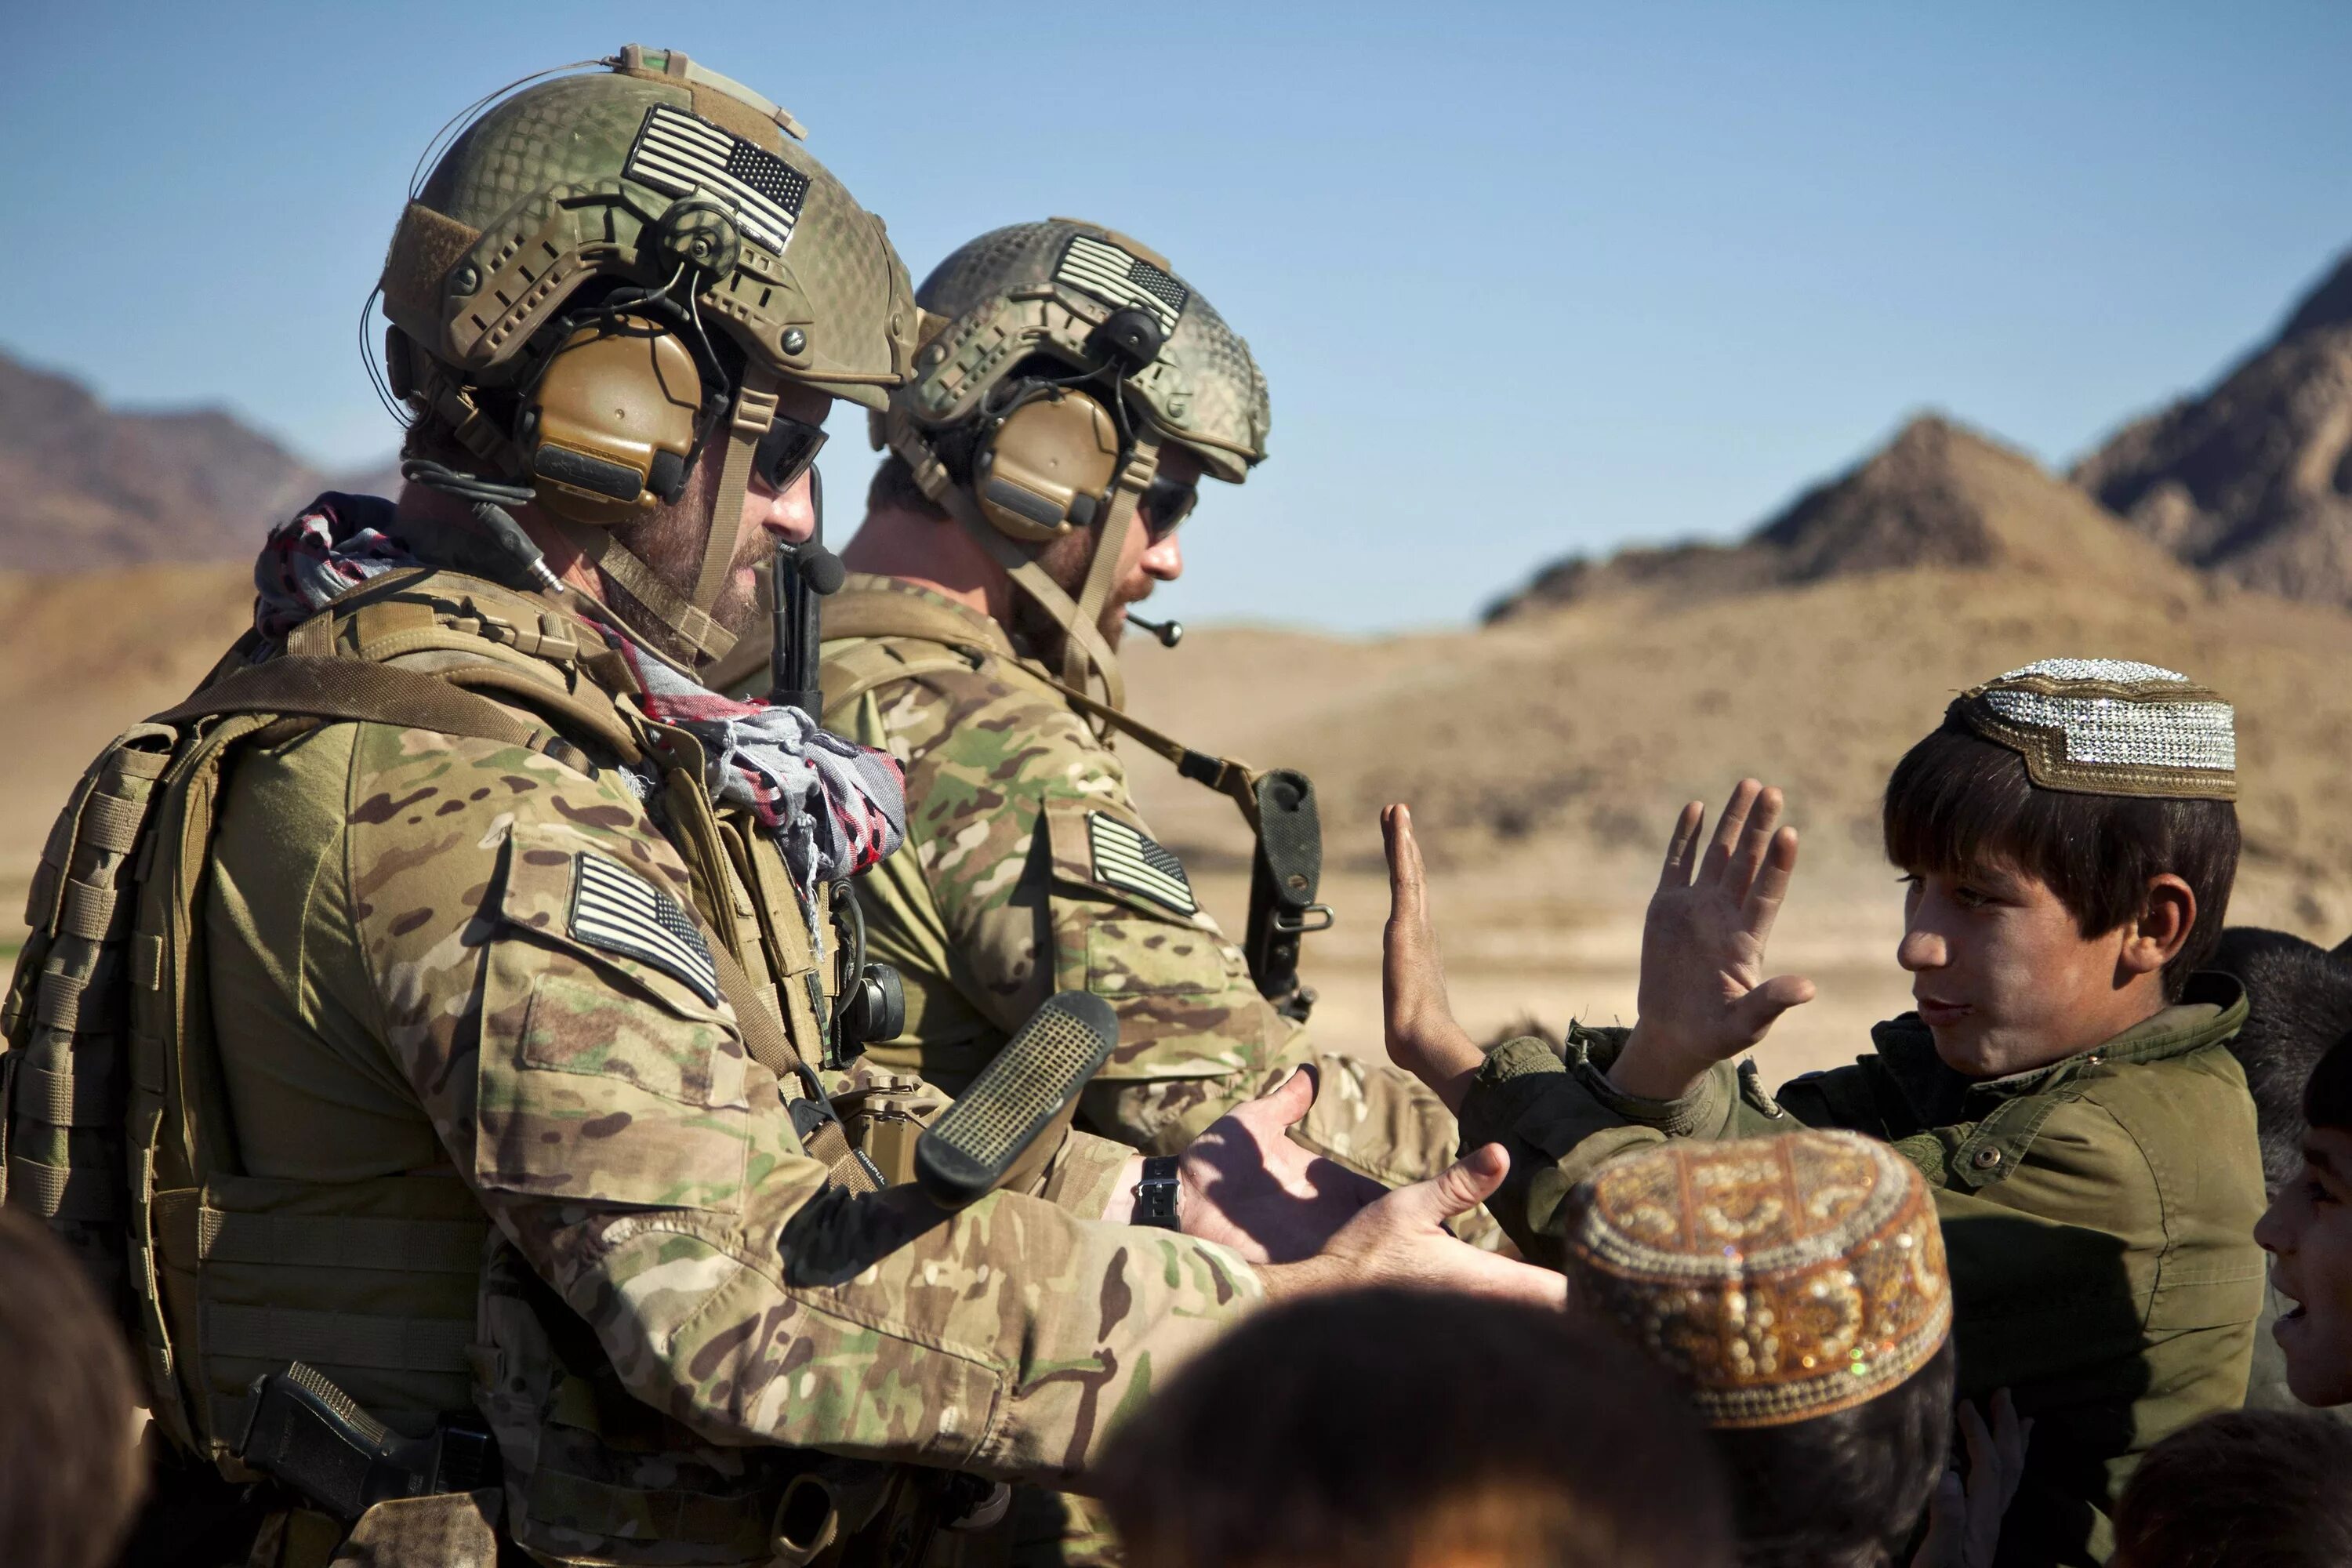 Jsoc. Special Forces США Green Beret. Green Berets Afghanistan 2001. Спецназ США MARSOC. Green Berets Afghanistan.